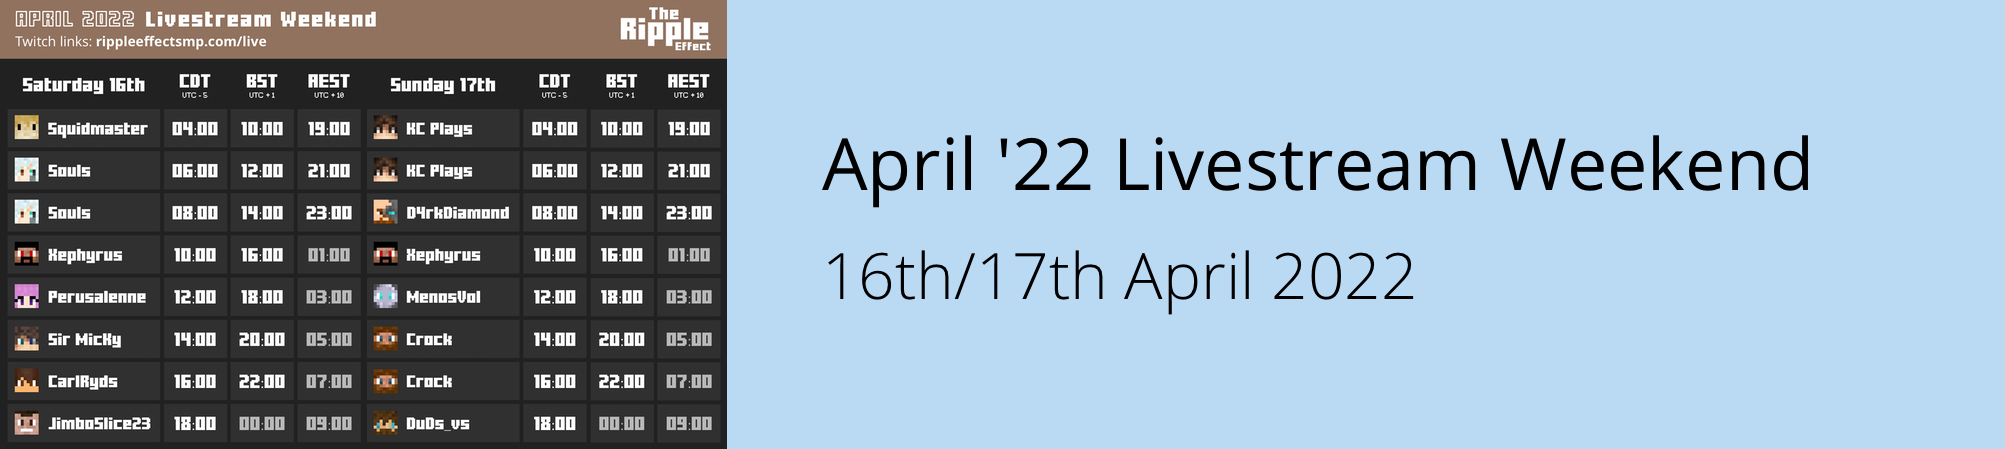 April 2022 Livestream Weekend